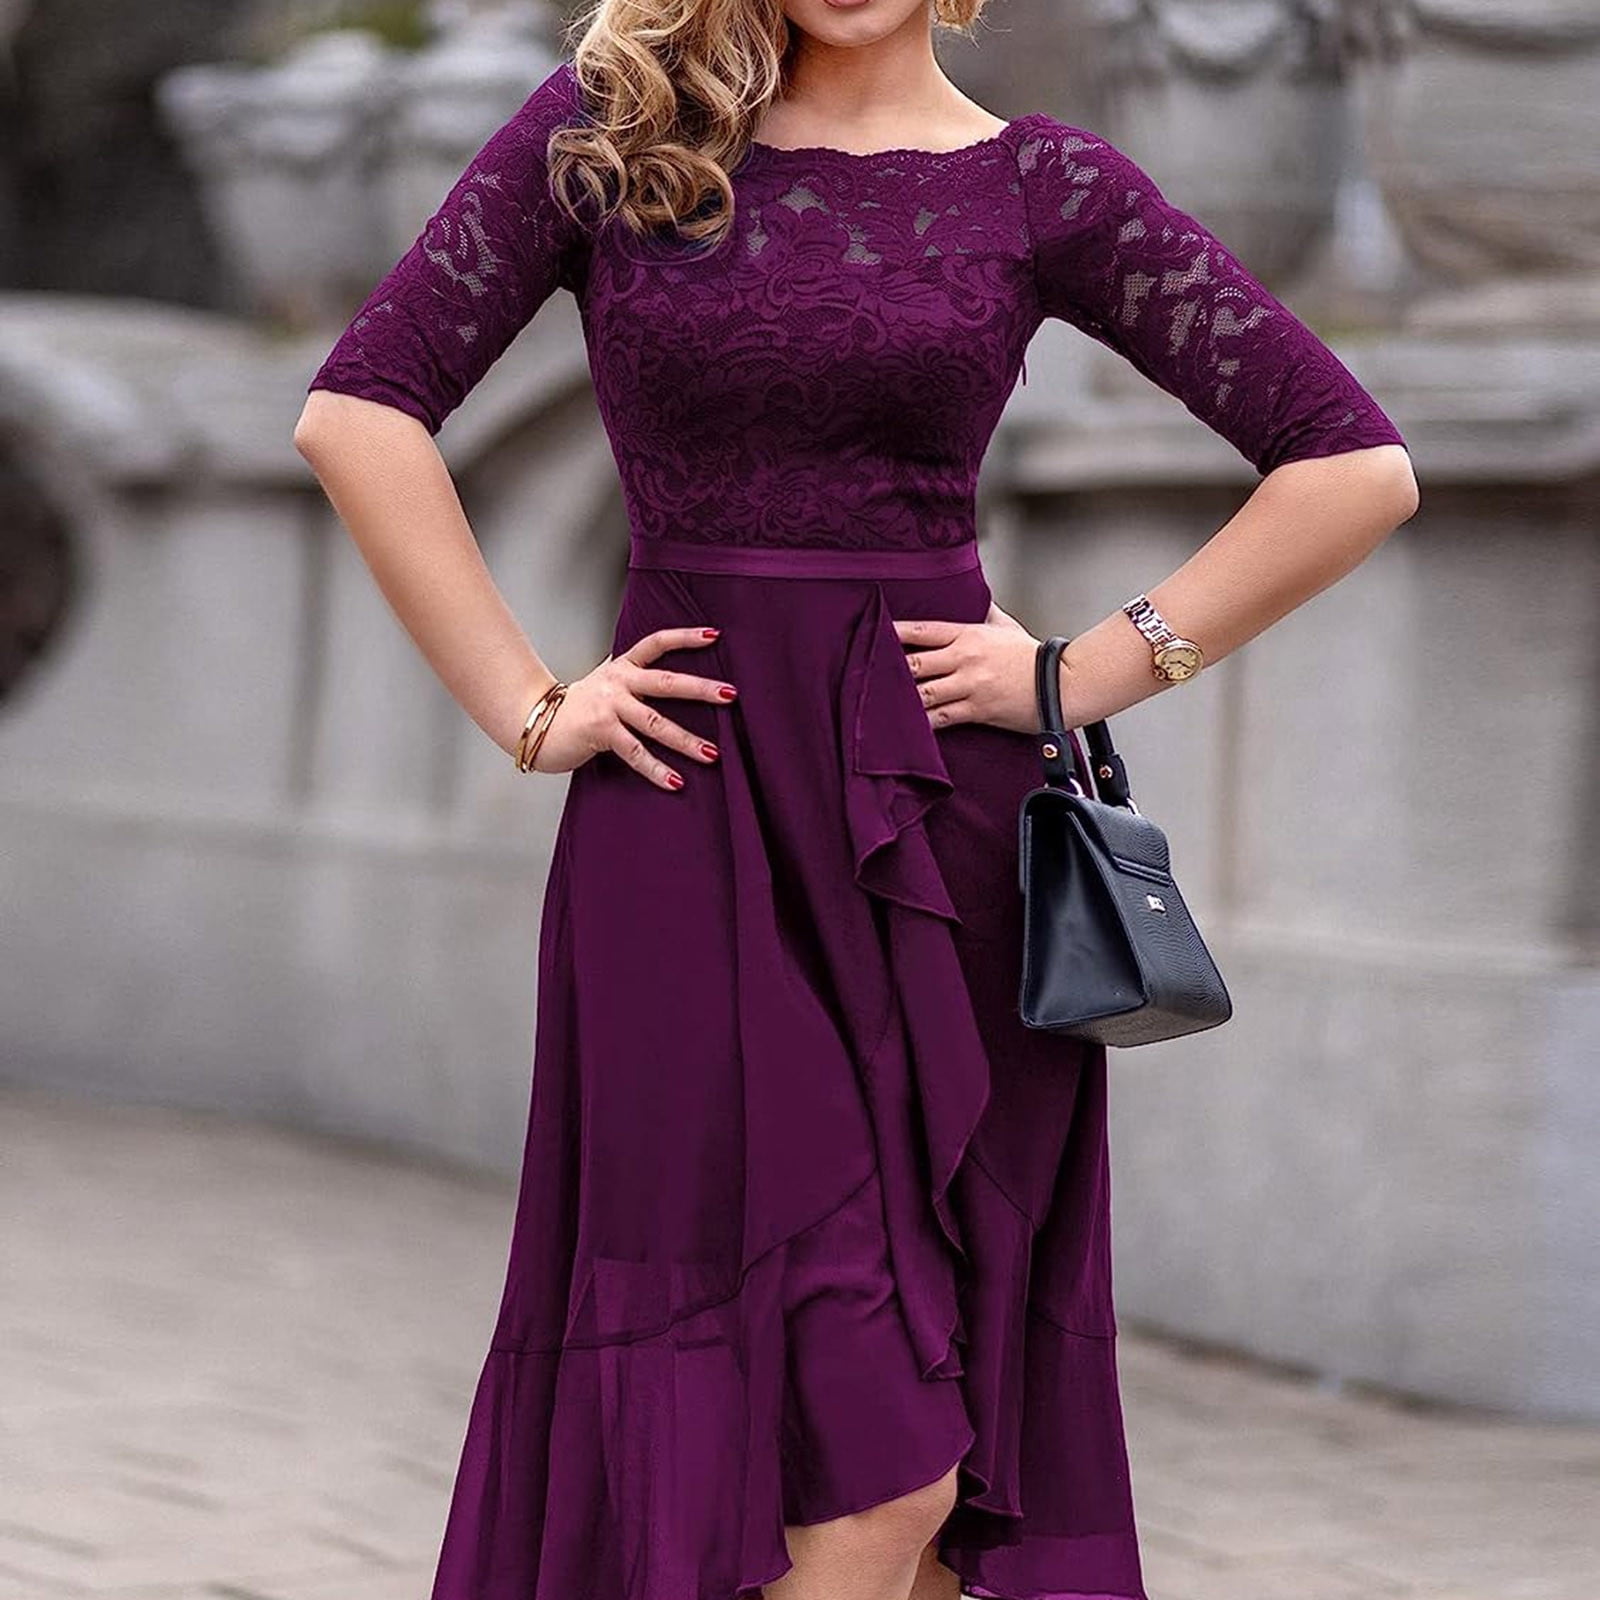 VKEKIEO 80s Prom Dresses Jumpsuit For Women Dressy A-line Regular Short  Sleeve Solid Purple S